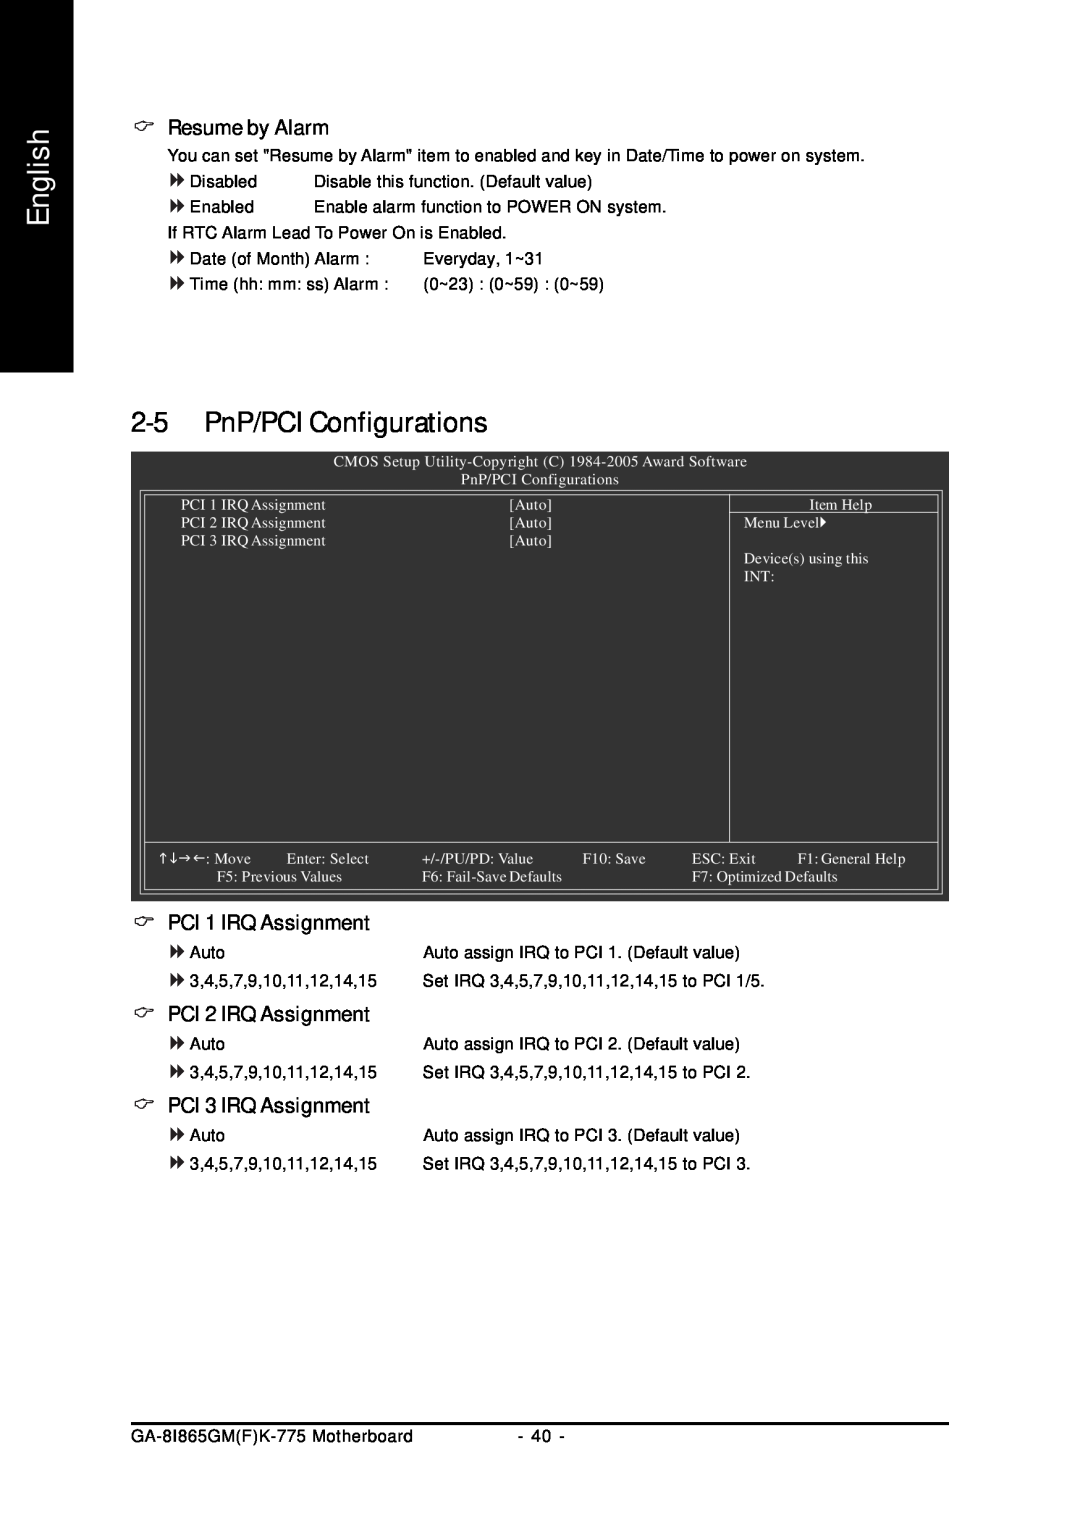 Gigabyte GA-8I865GMFK-775 PnP/PCI Configurations, Resume by Alarm, PCI 1 IRQ Assignment, PCI 2 IRQ Assignment, English 